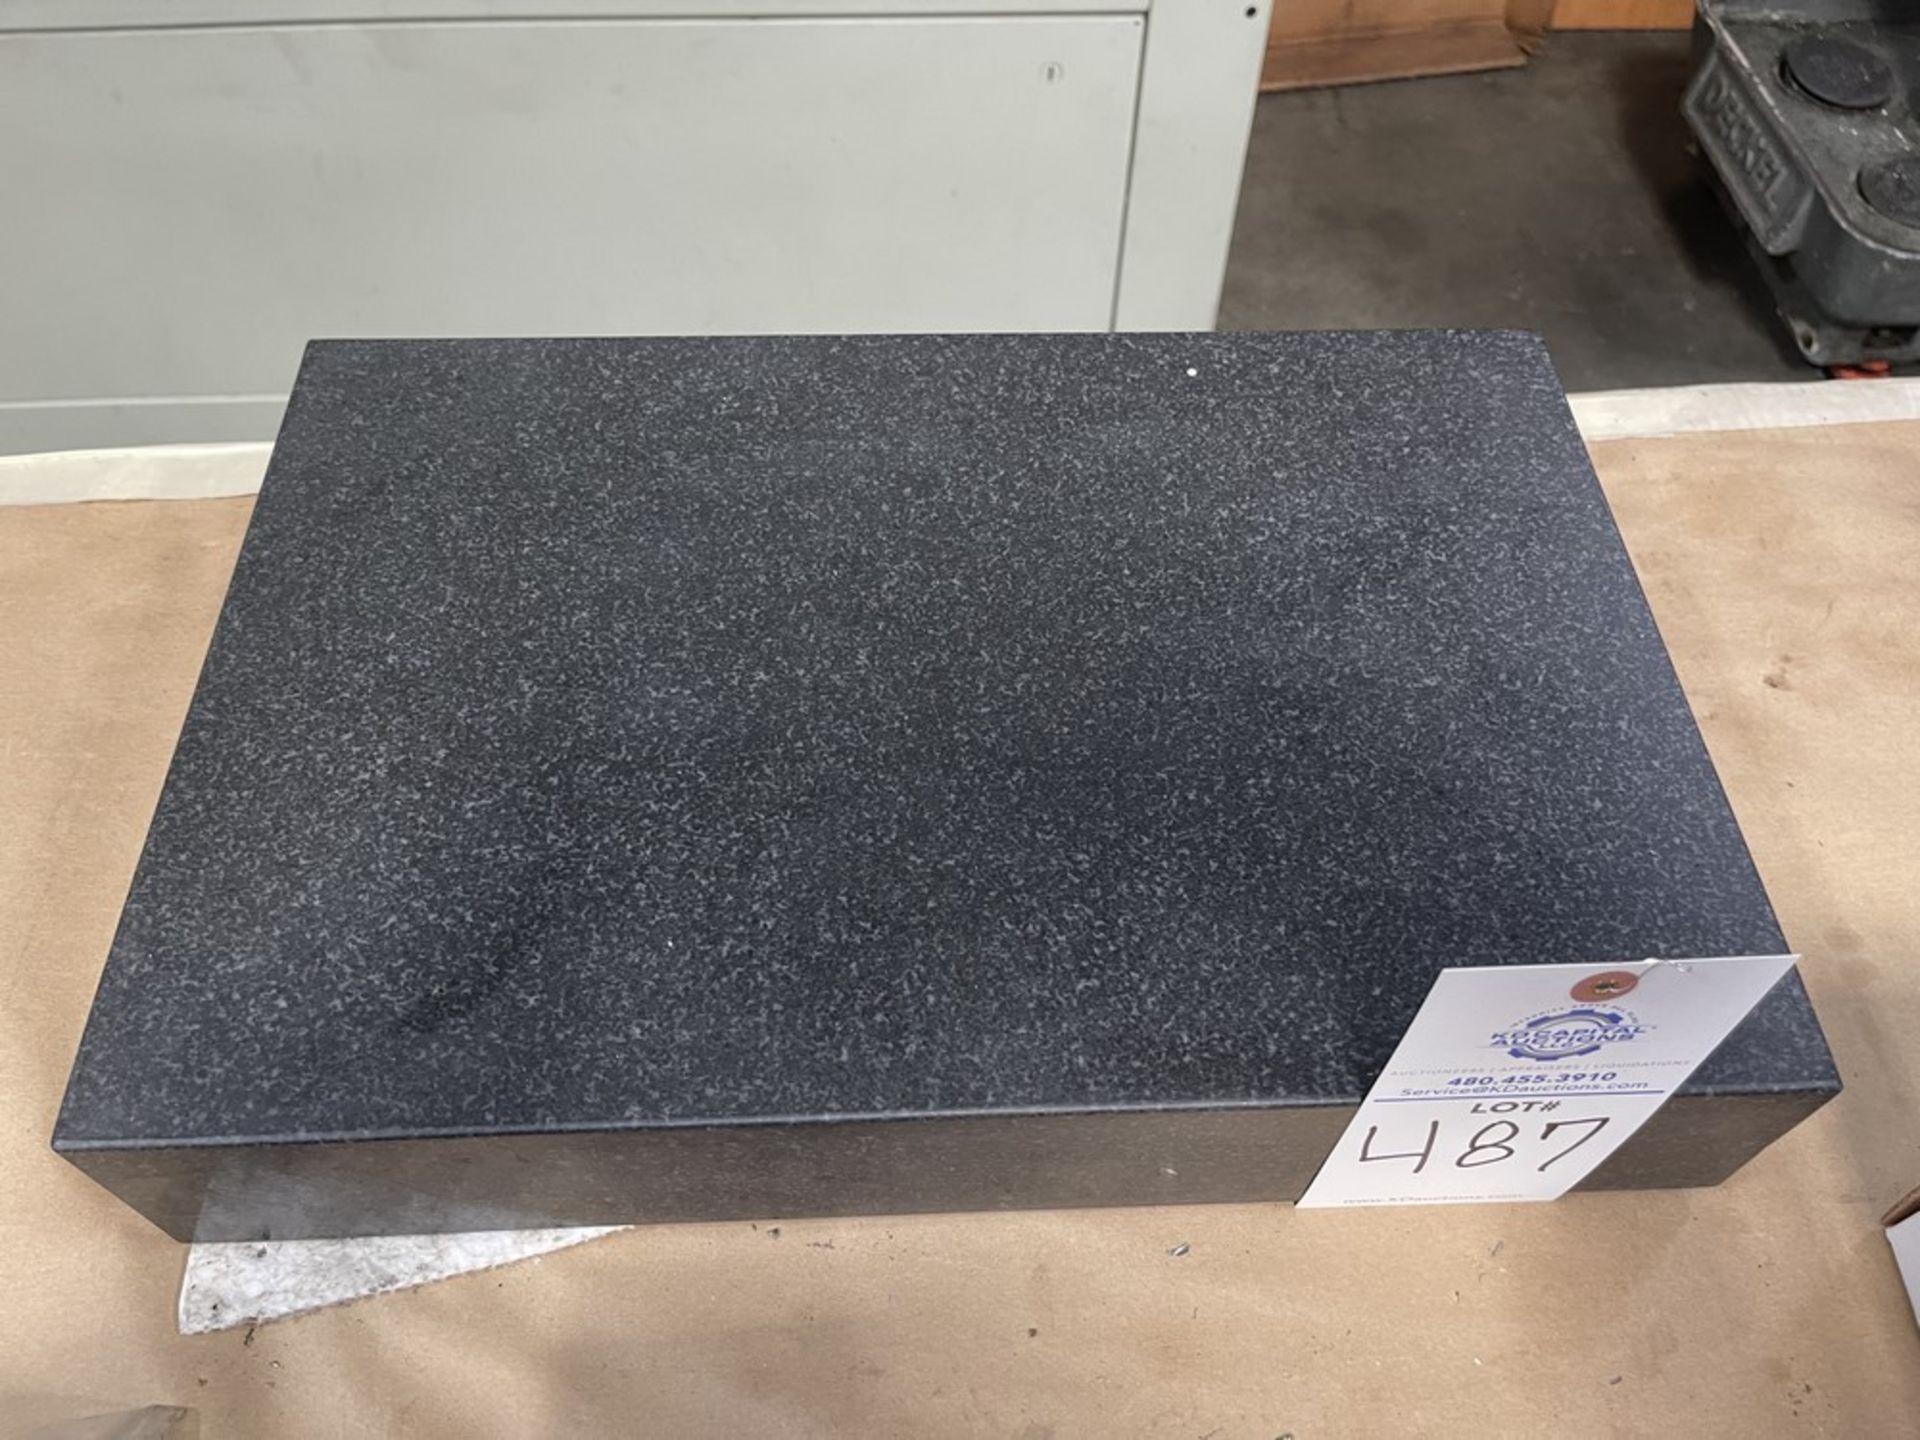 18" x 12" x 3" Granite Surface Plate